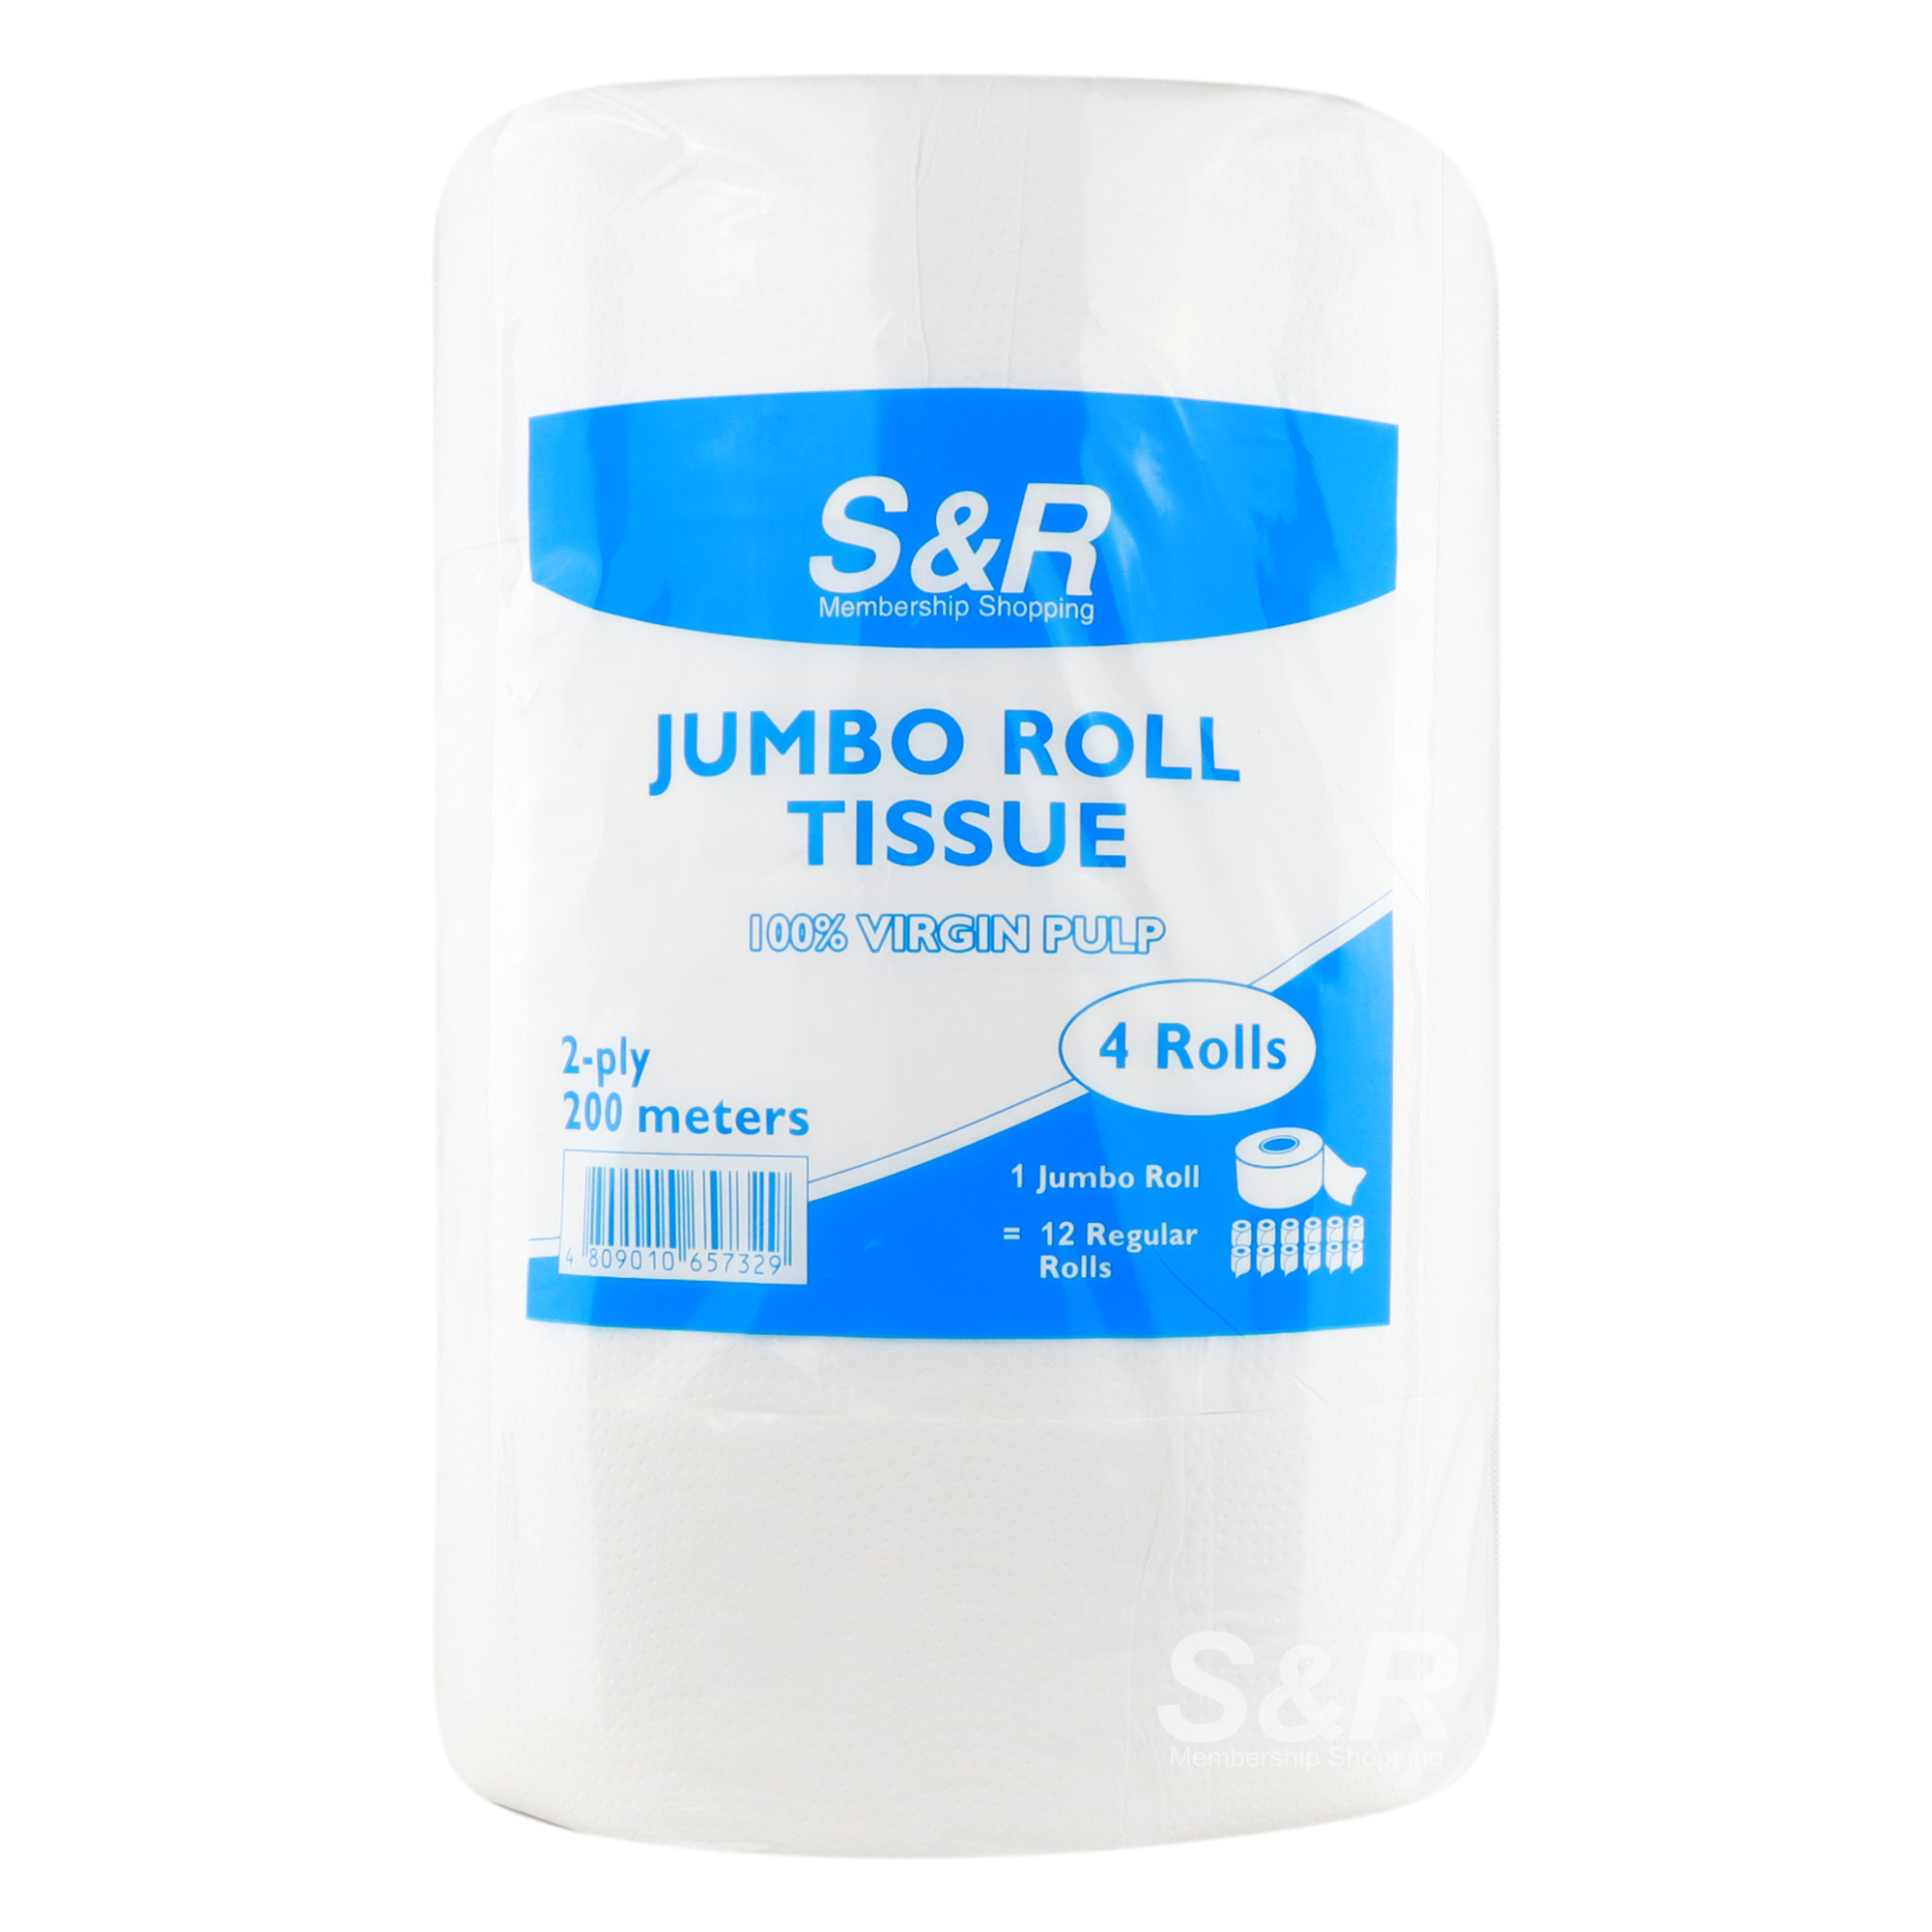 S&R Jumbo Roll Tissue 2-Ply 100% Virgin Pulp 4 rolls